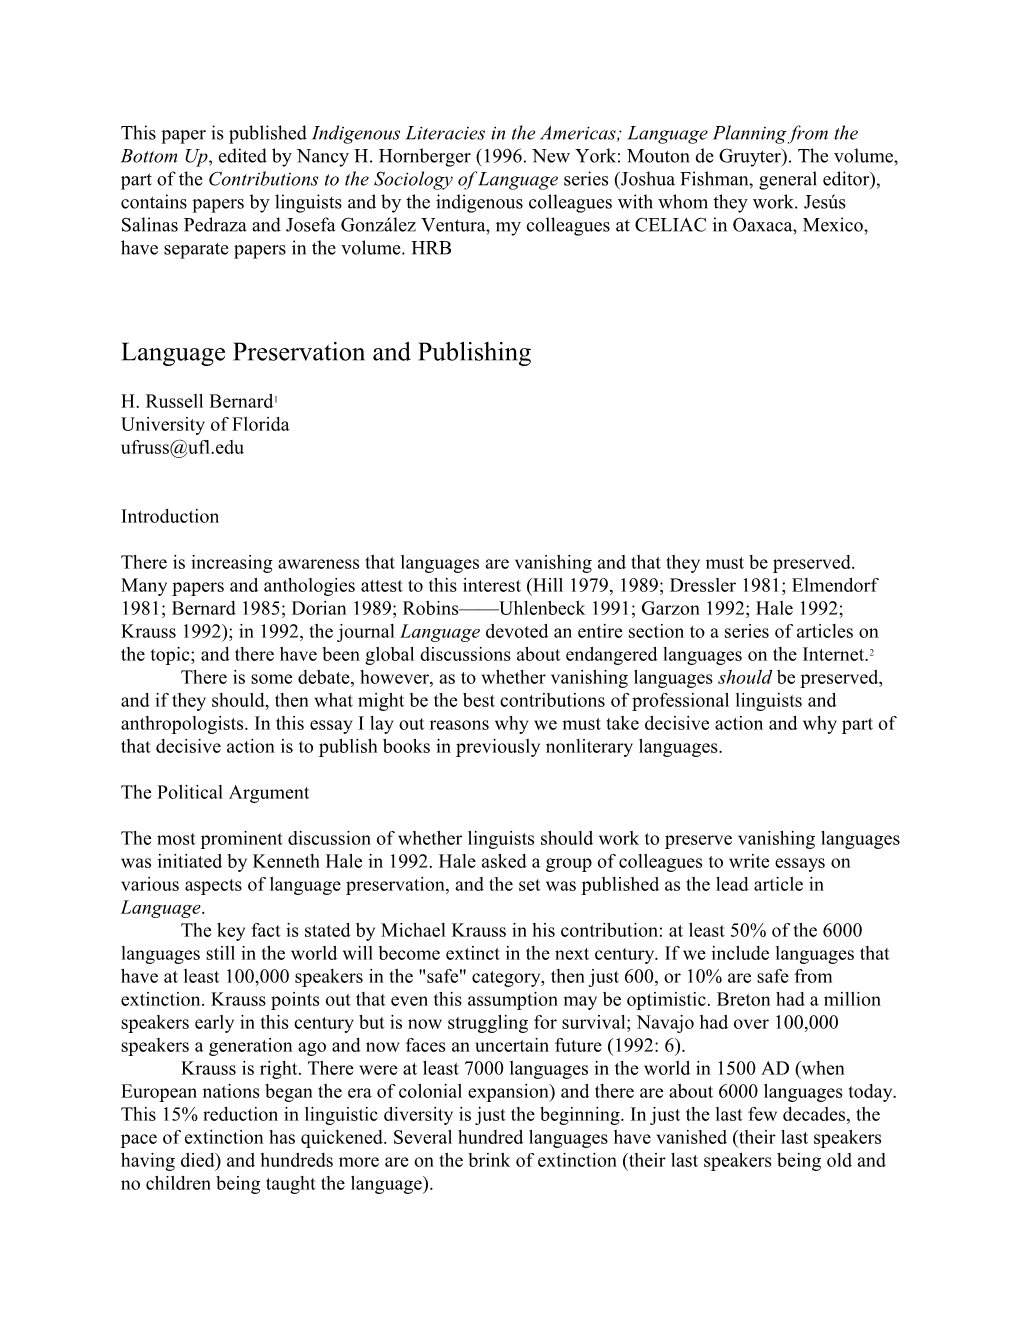 Language Preservation and Publishing